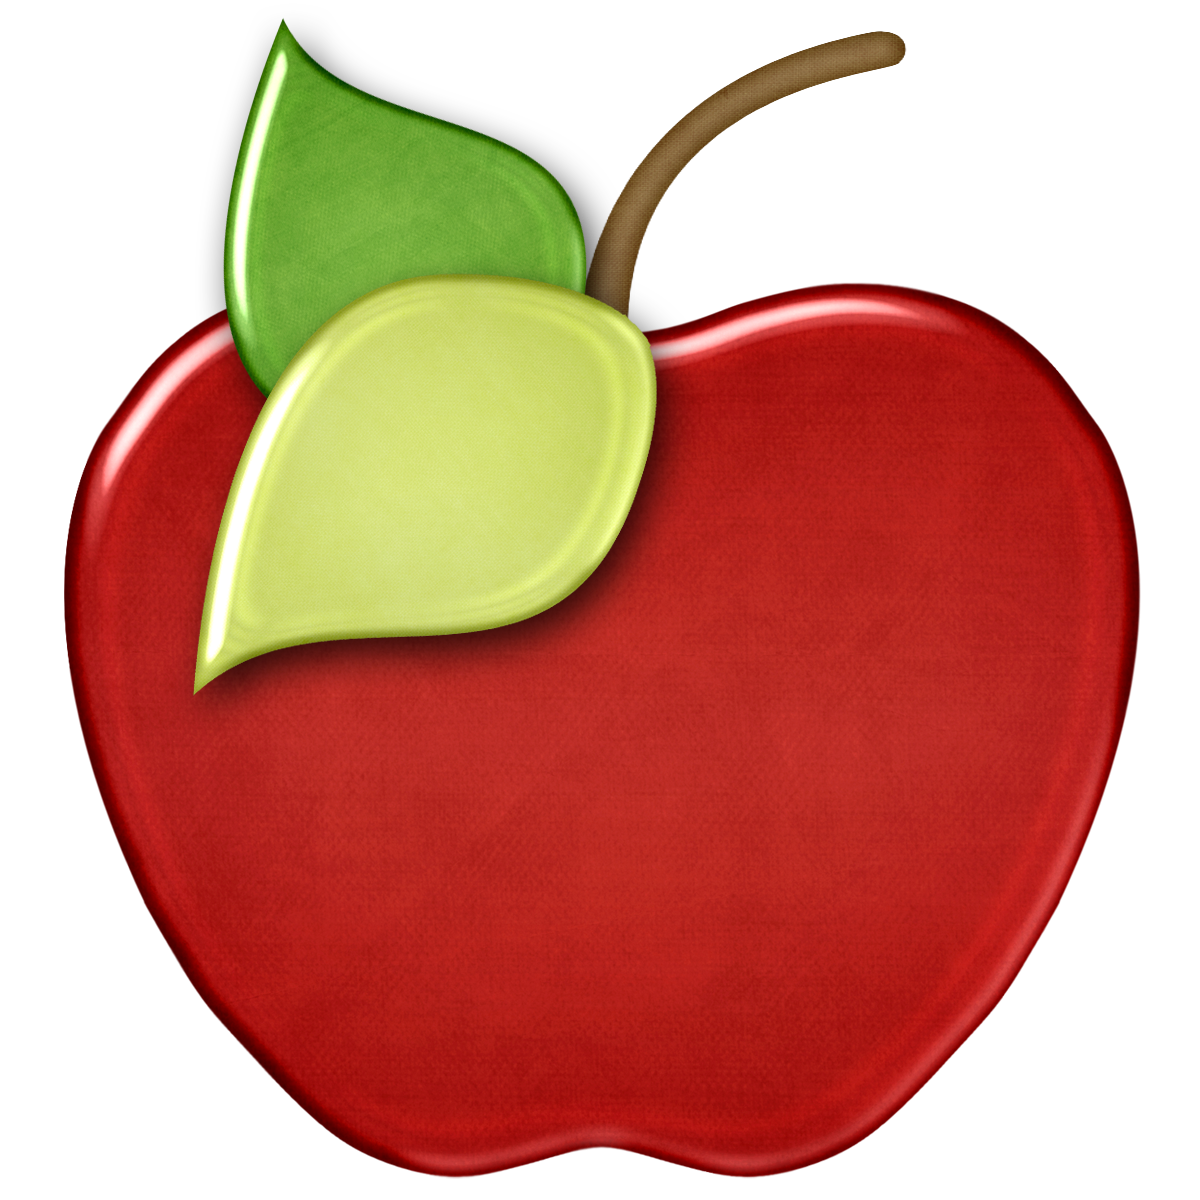 Apple Teacher Sculpture Clip Art Apple Png Download 12001200